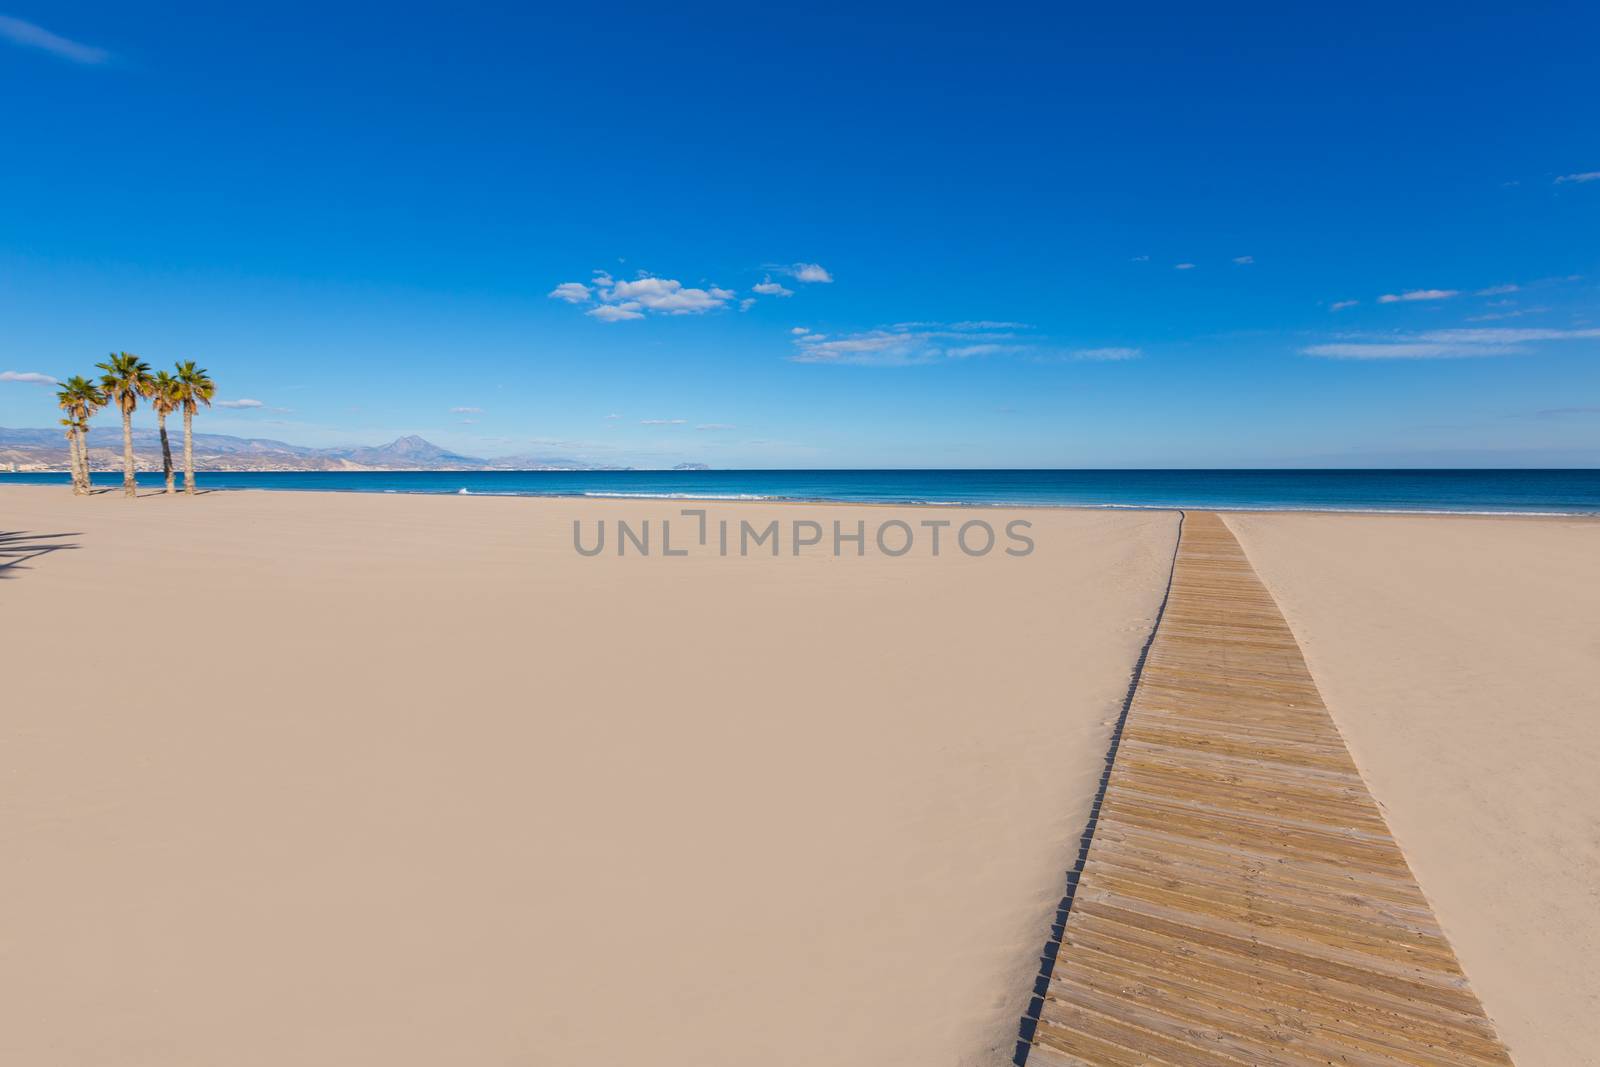 Alicante San Juan beach with palms trees of Mediterranean sea at Spain valencian Community